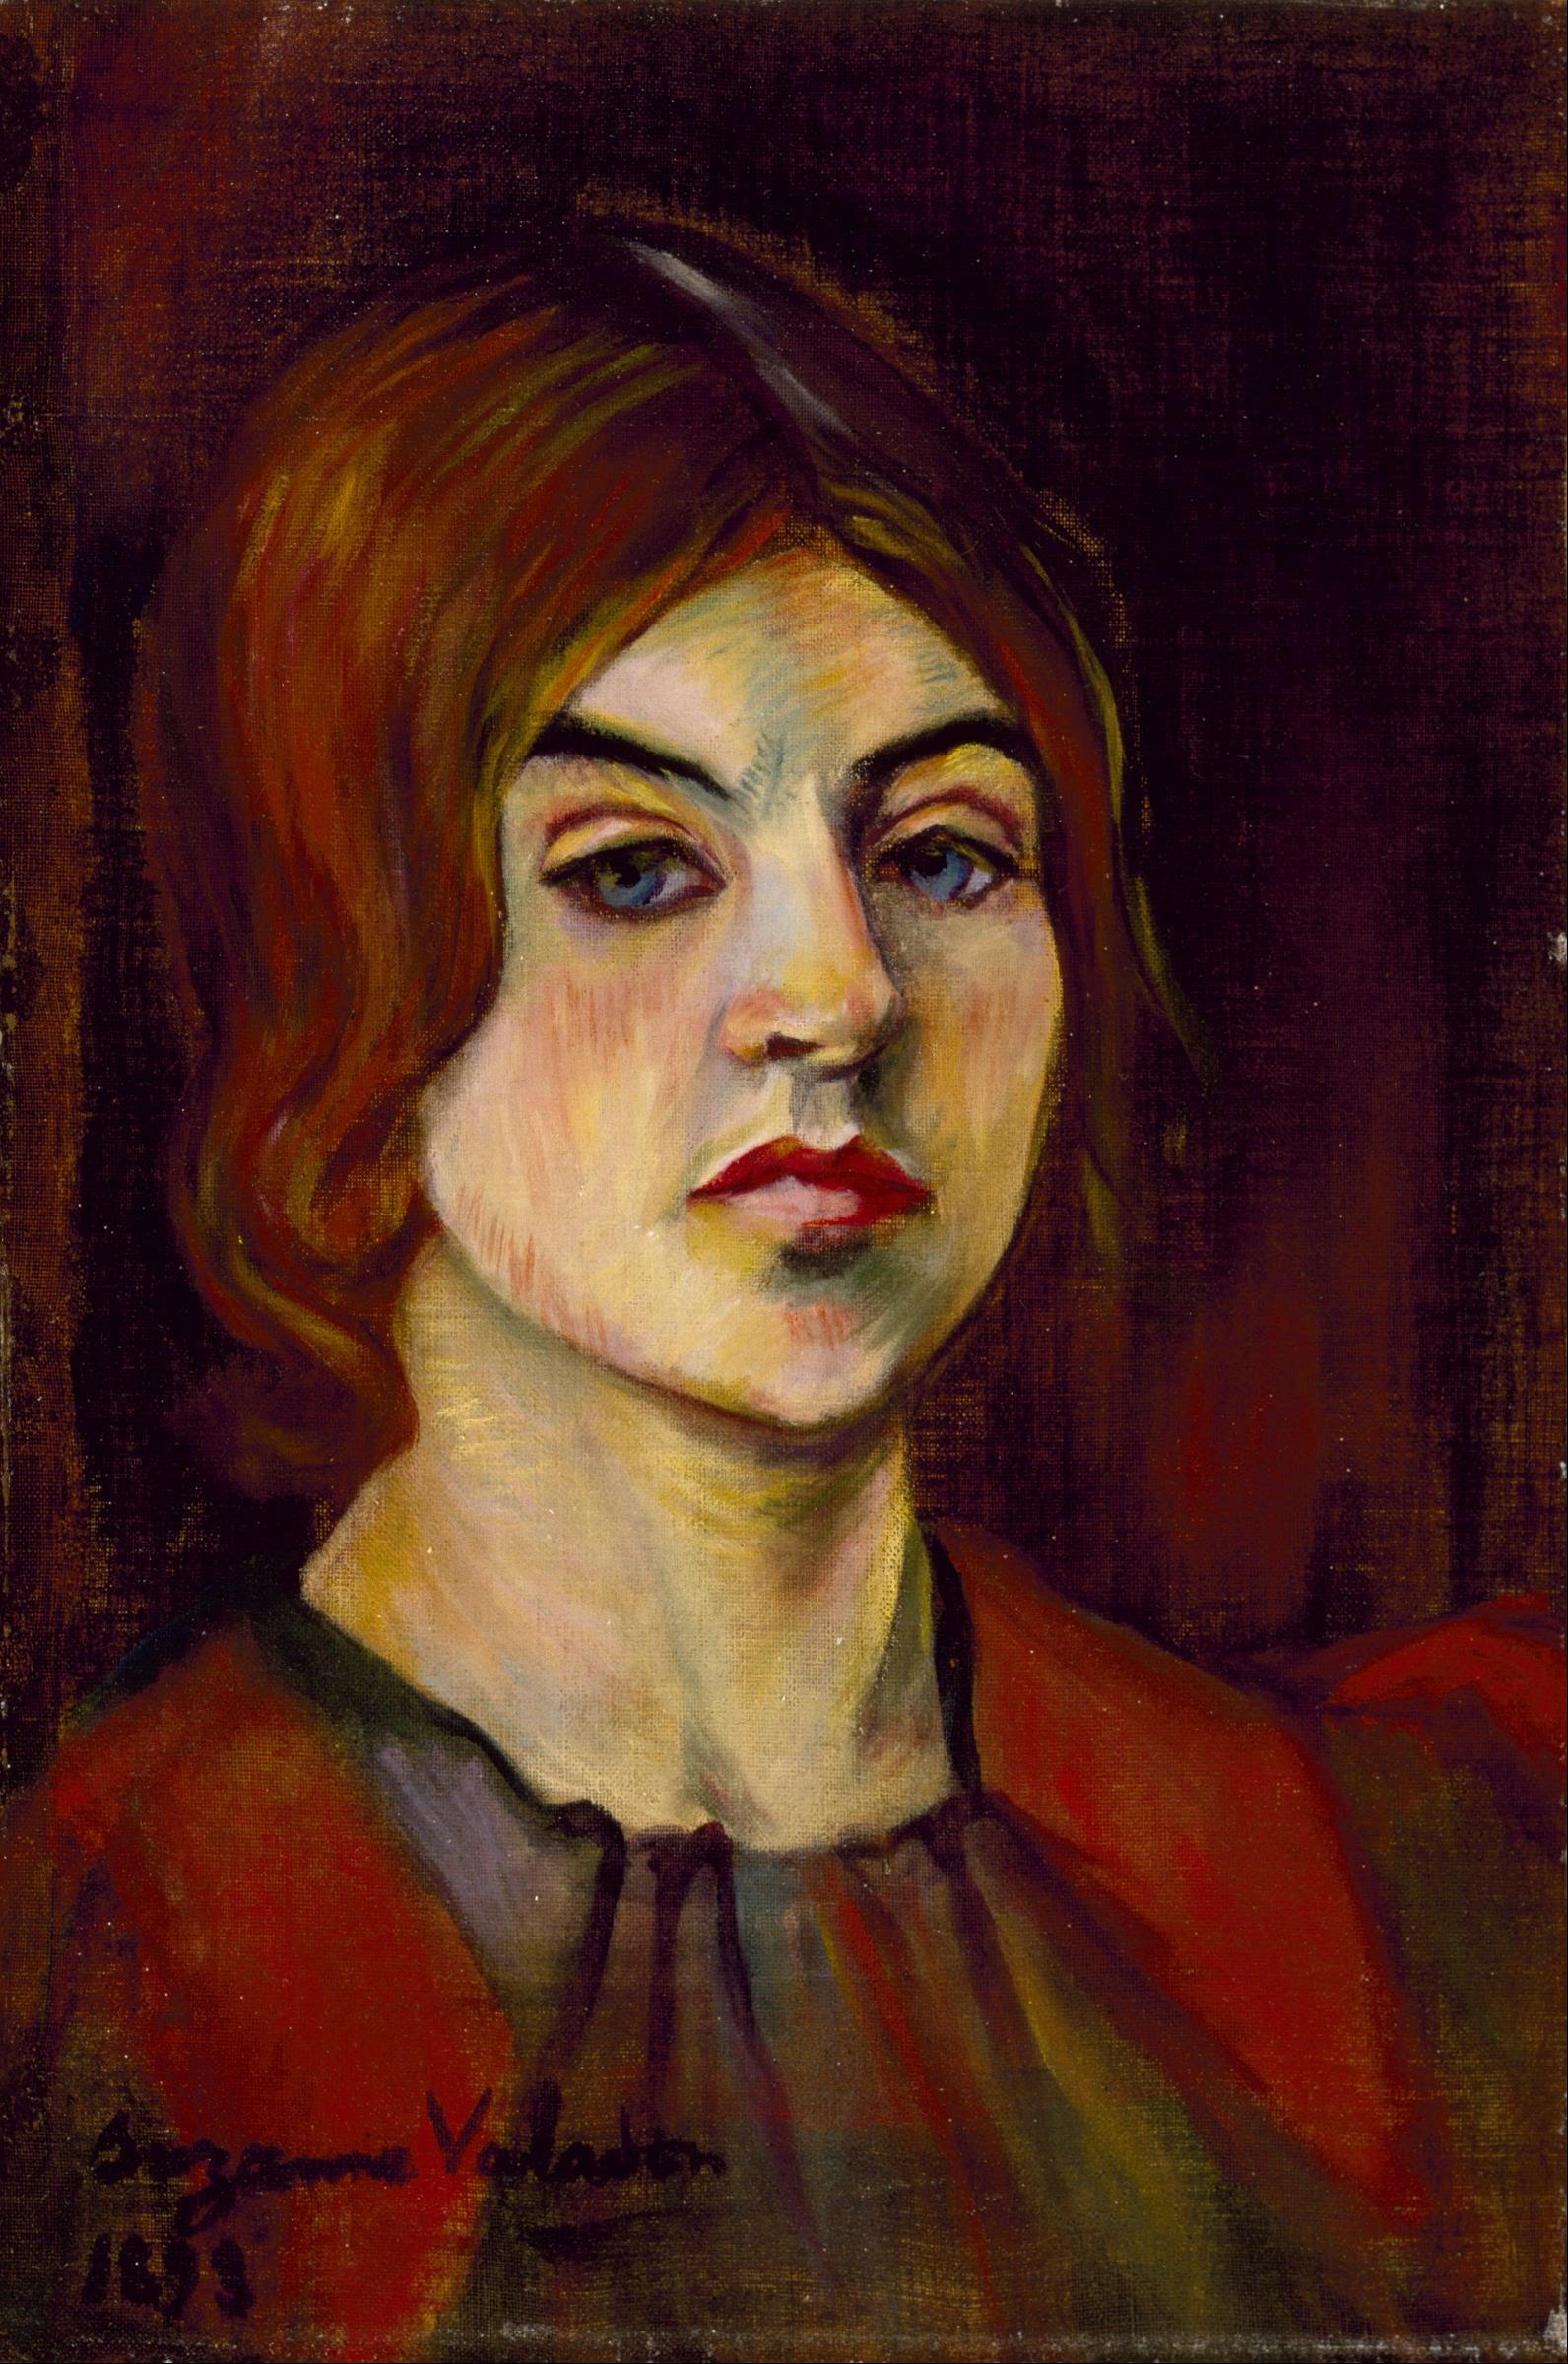 Suzanne_Valadon_-_Self-Portrait_-_Google_Art_Project_1898.jpg